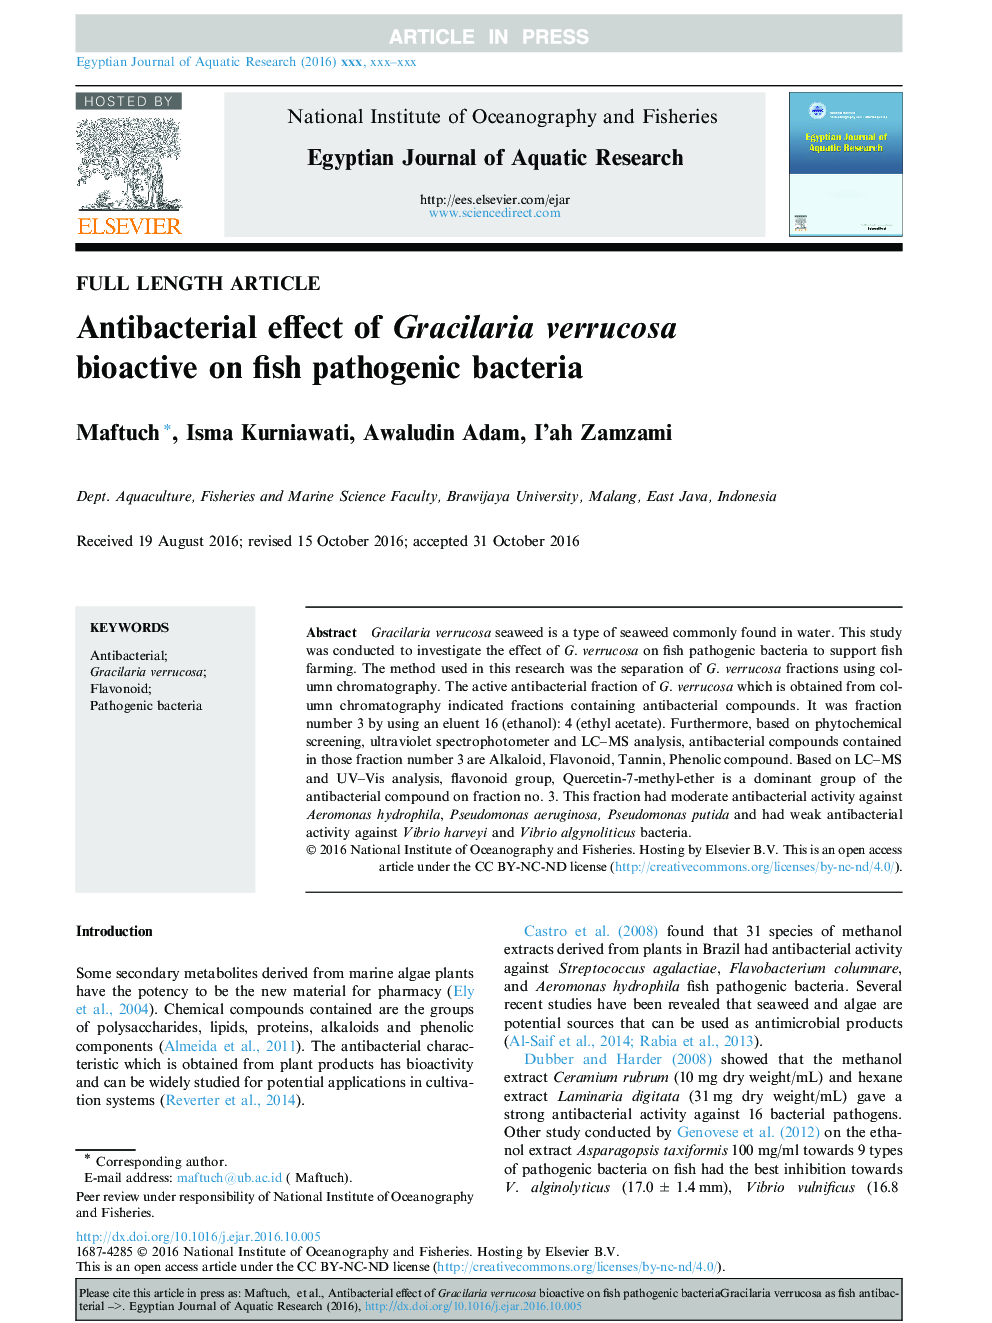 Antibacterial effect of Gracilaria verrucosa bioactive on fish pathogenic bacteria